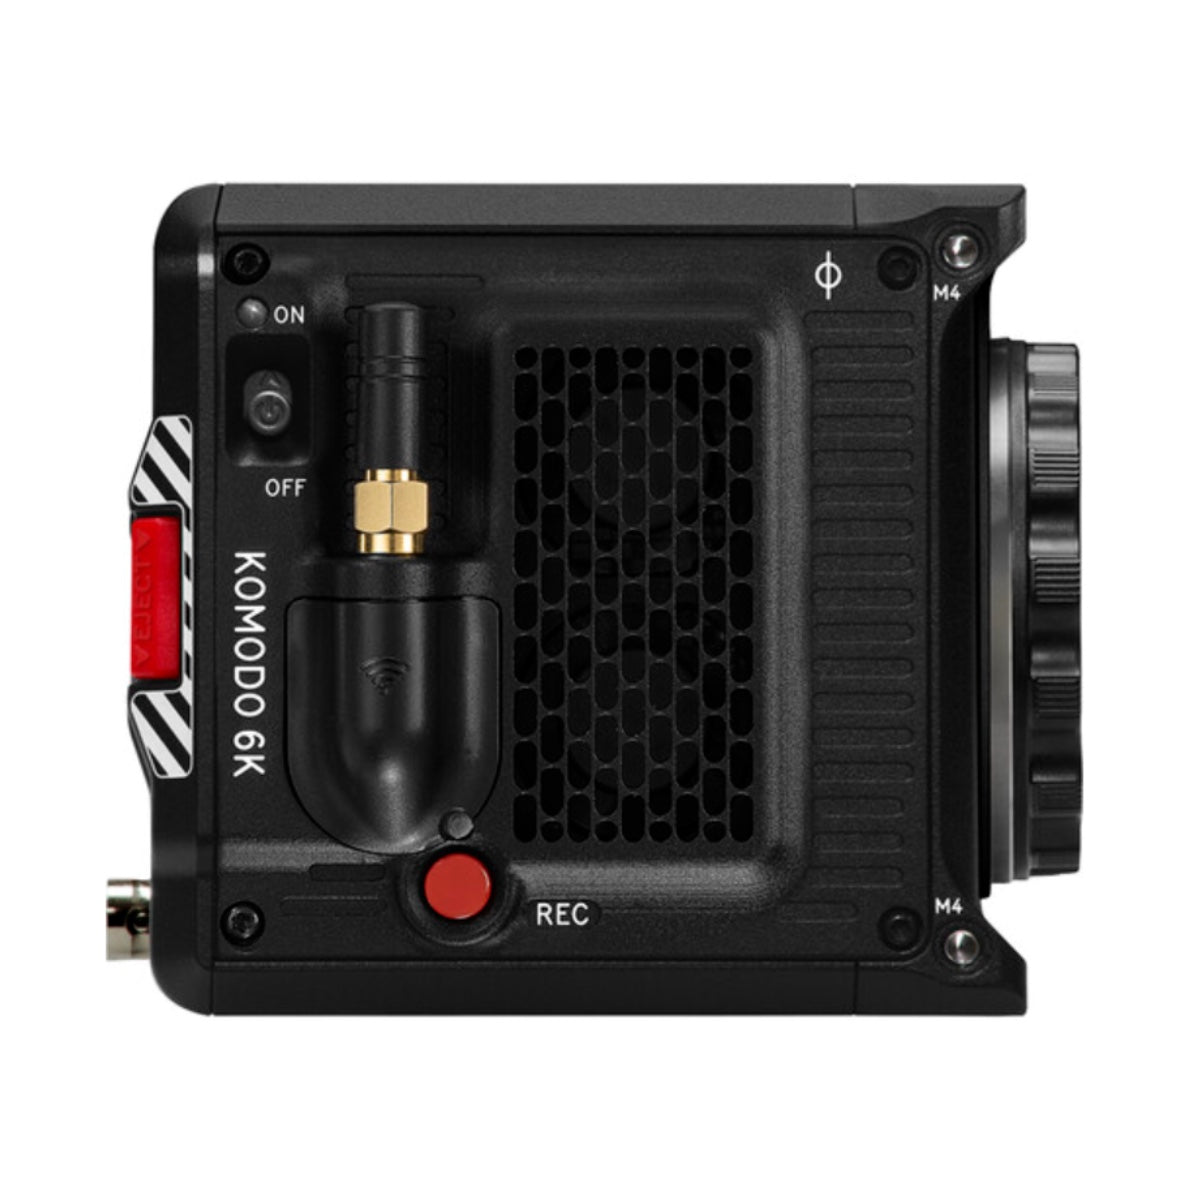 RED Digital Cinema Komodo 6K Digital Cinema Camera (Canon RF)